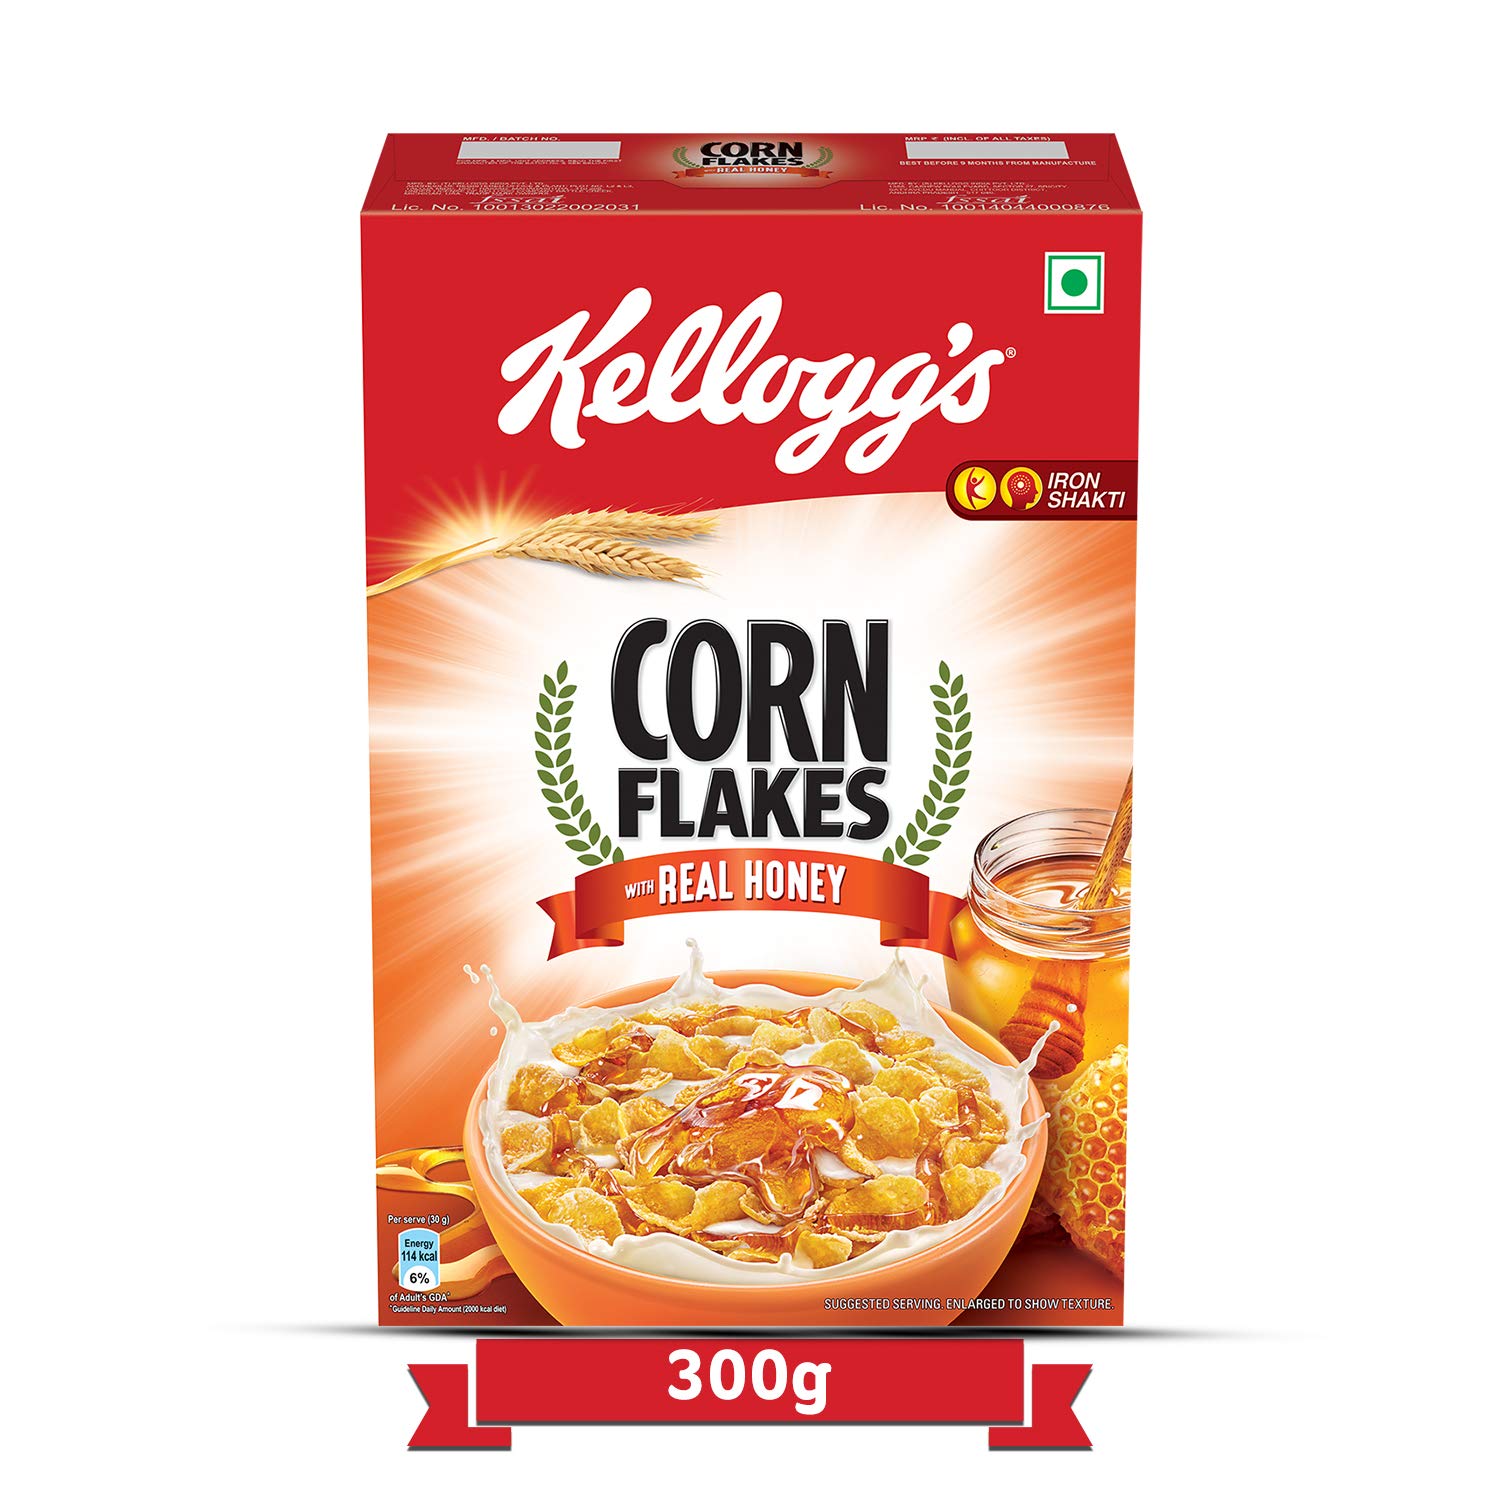 Kellogg's Corn Flakes with Real Honey, 300g